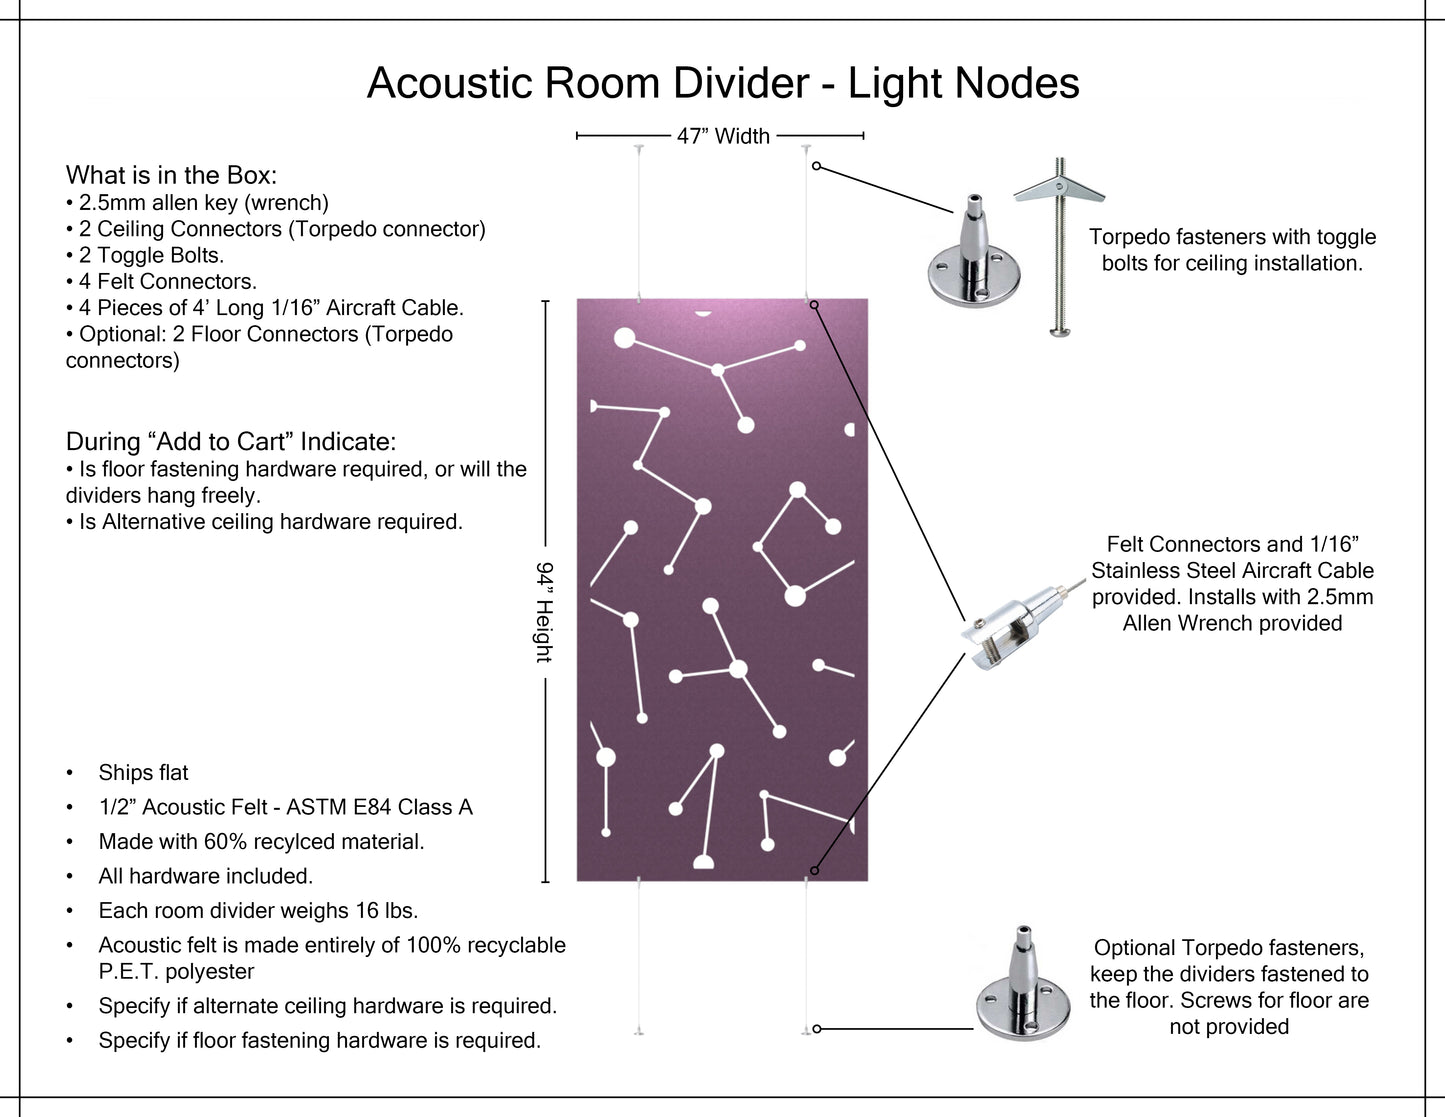 4x8 Acoustic Room Divider - Light Nodes